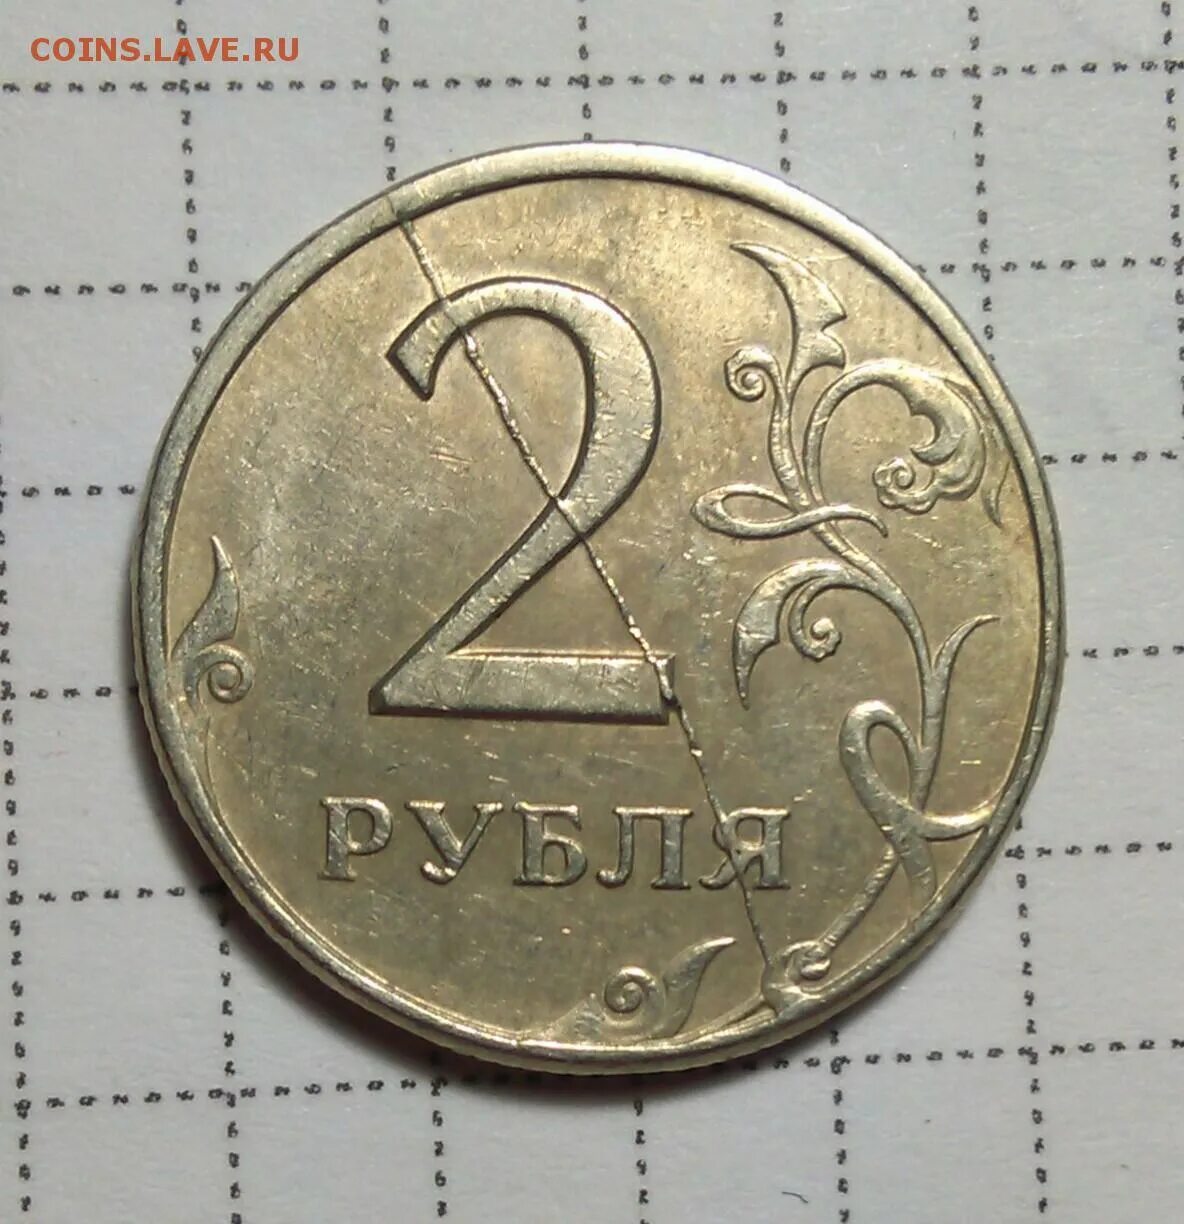 2 рубль 1997 года цена стоимость. Монета 2 рубля 1997 СПМД. Монета 2 рубля 1997 года СПМД. Реверс монеты два €. Медные 2 рубля 1997 года.